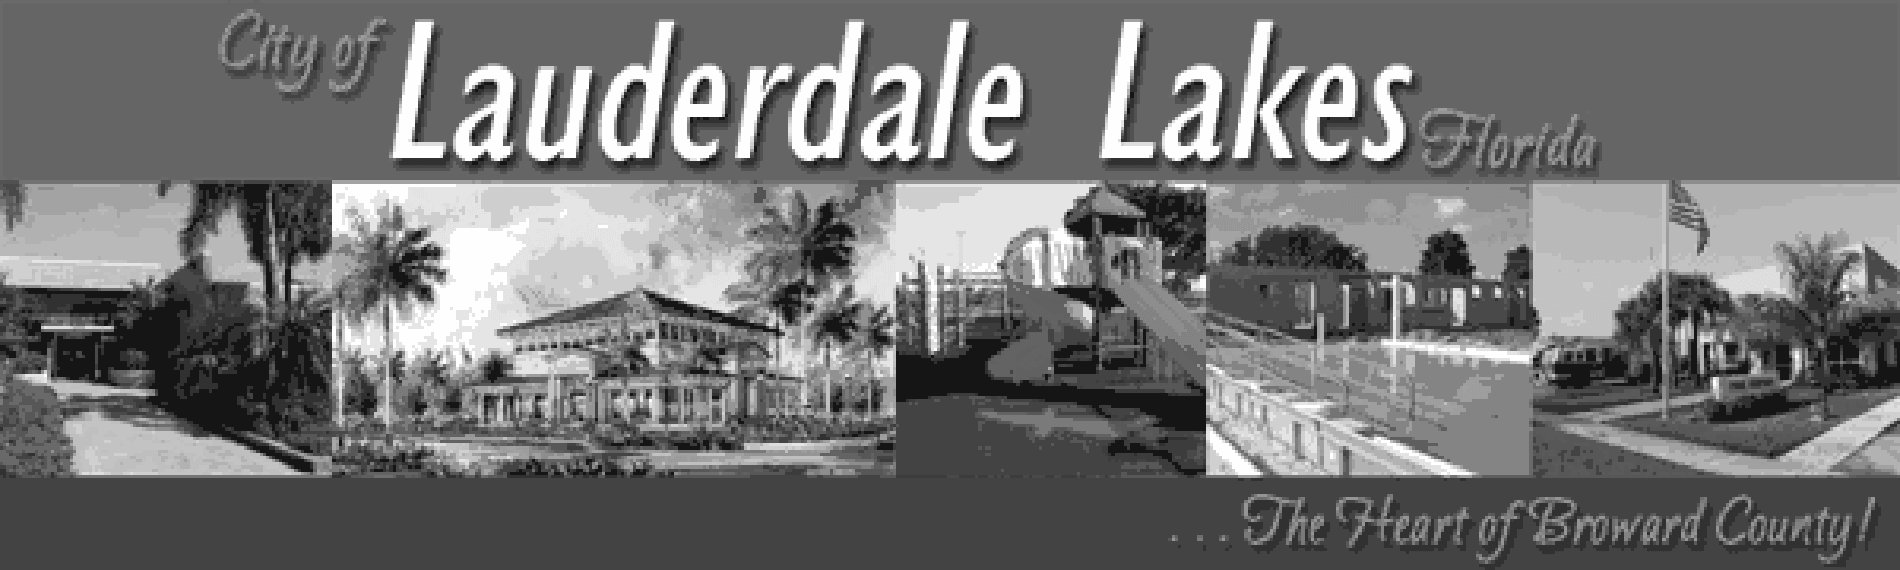 Lauderdale Lakes SEO - Local SEO & Internet Marketing